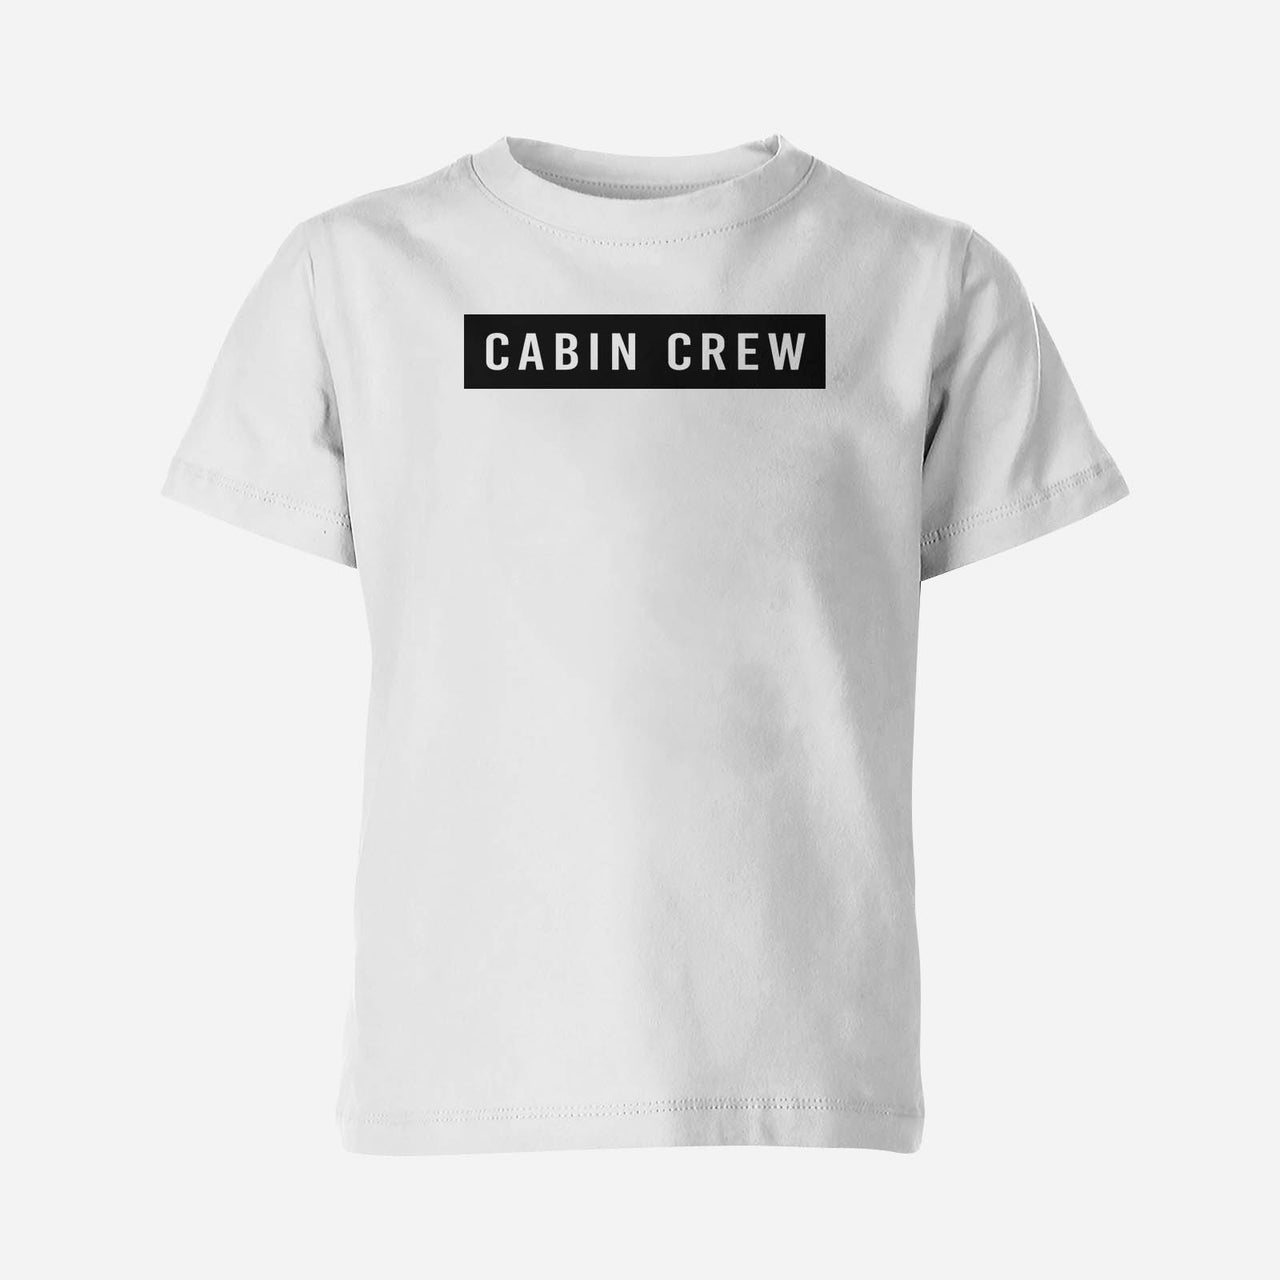 Cabin Crew Text Designed Children T-Shirts